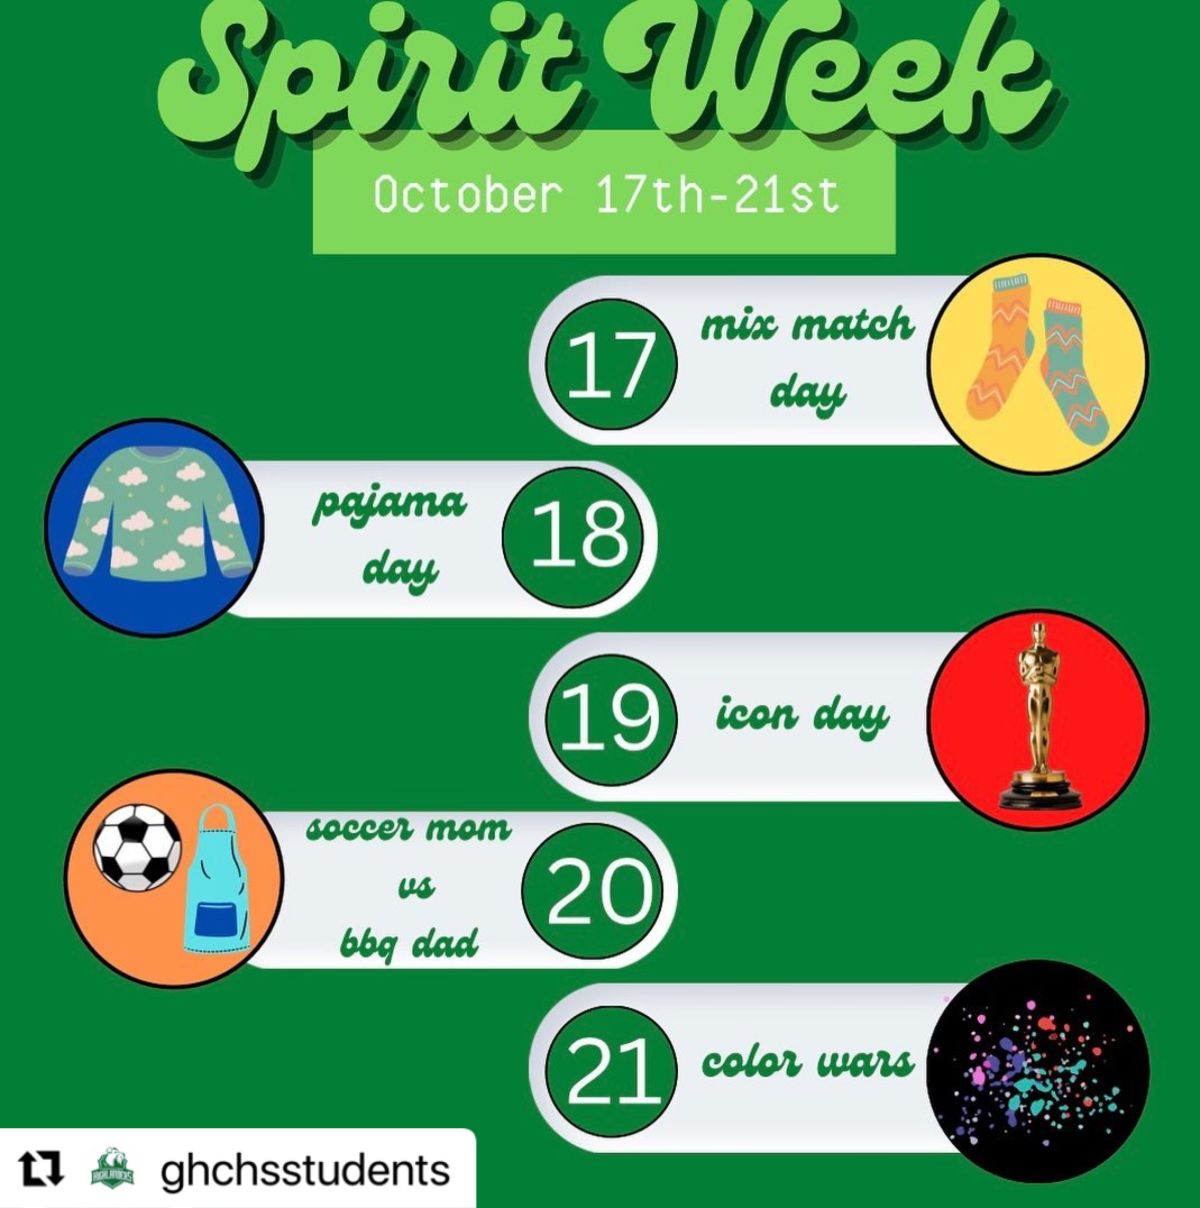 Get Ready For Spirit Week! Details